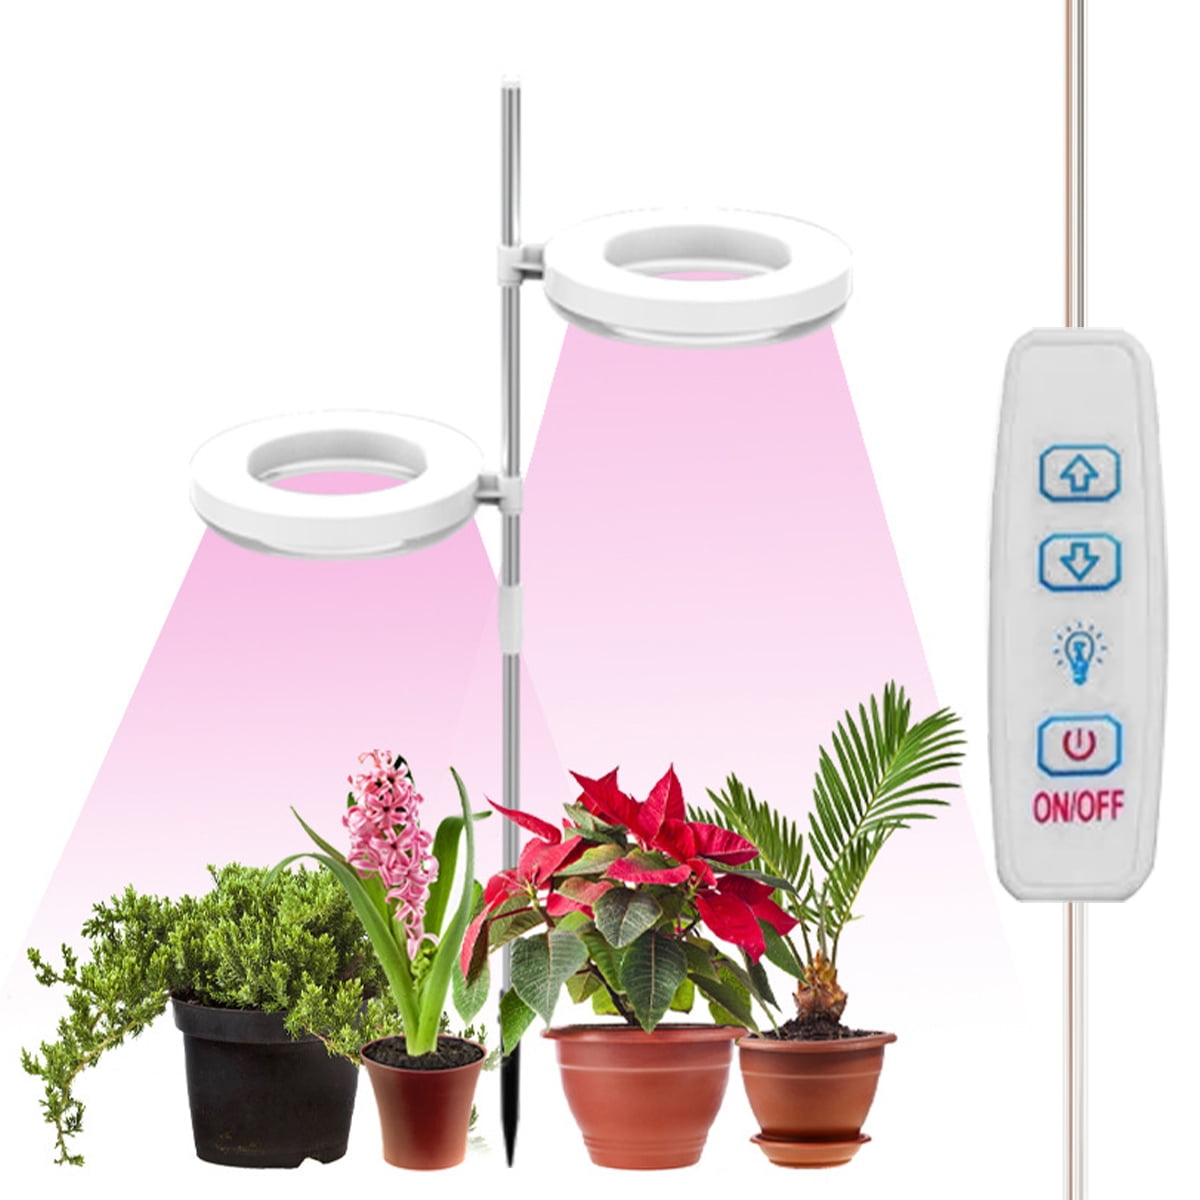 USB led grow light spectrum hydroponics Indoor desk Article bar Growth Lamp KI 